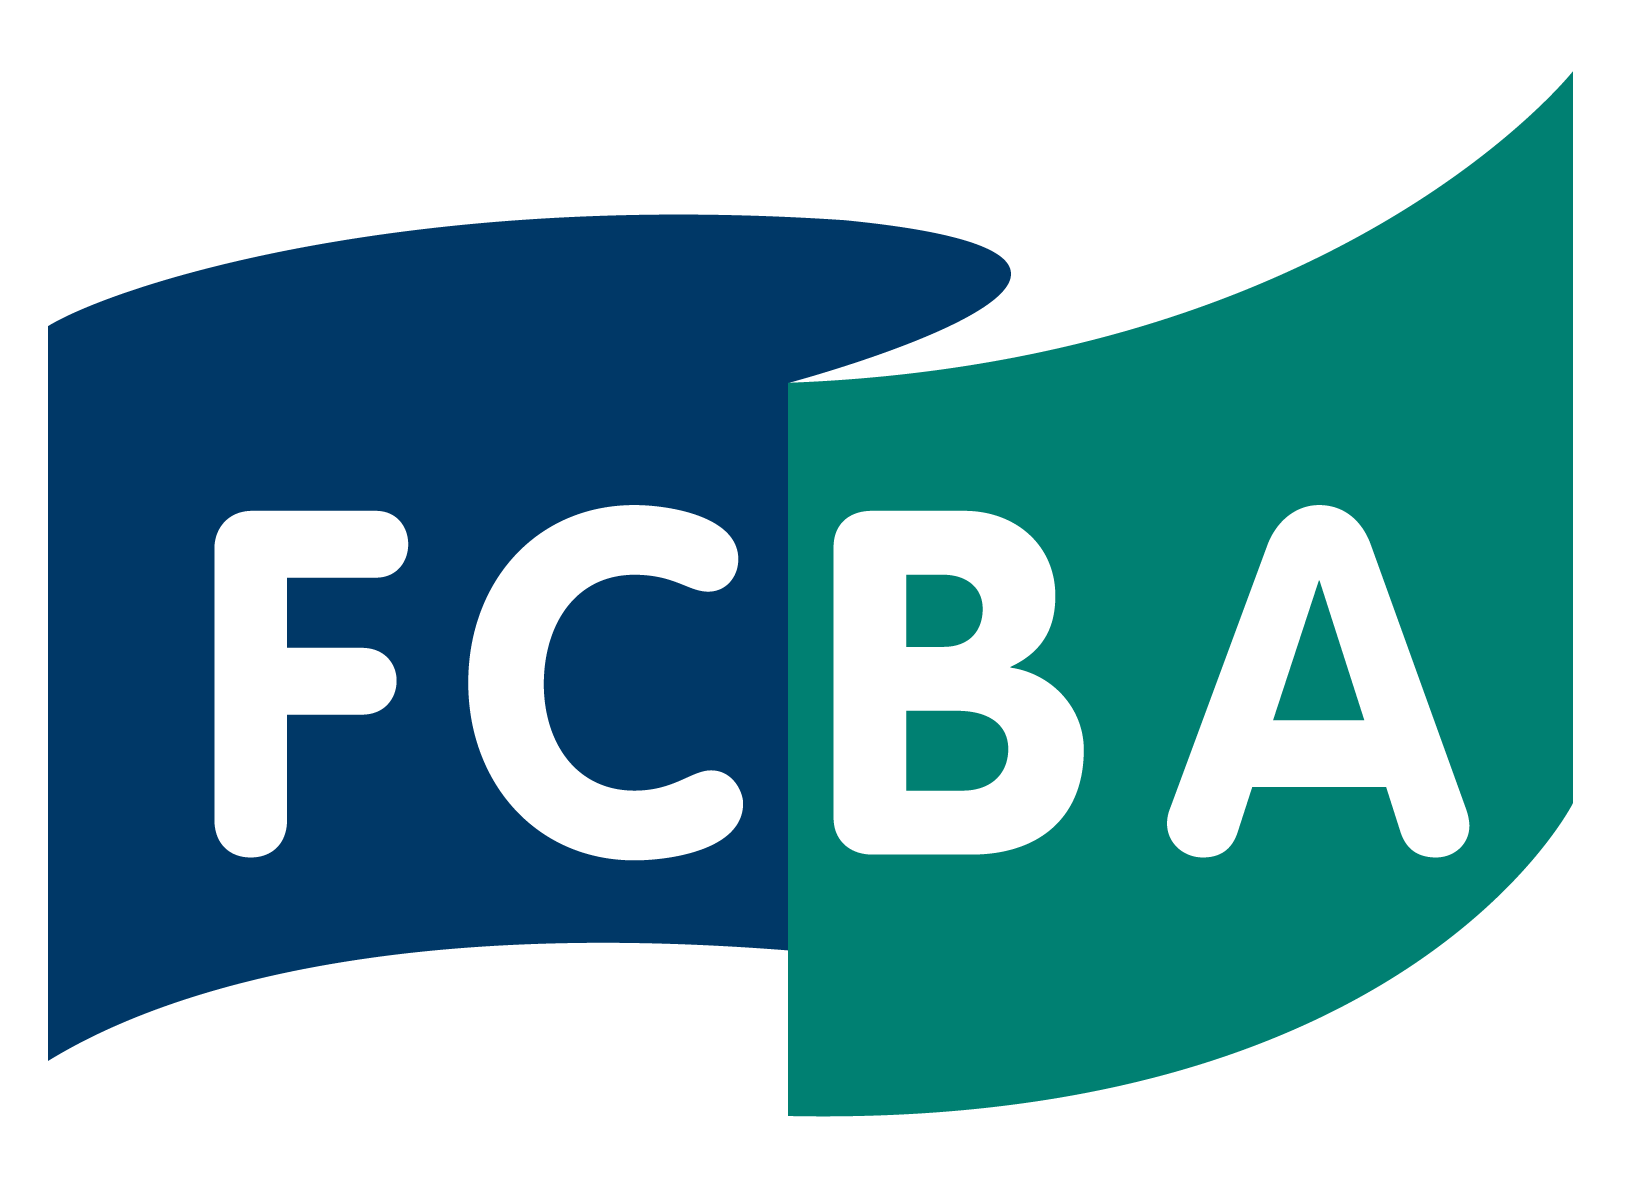 FCBA